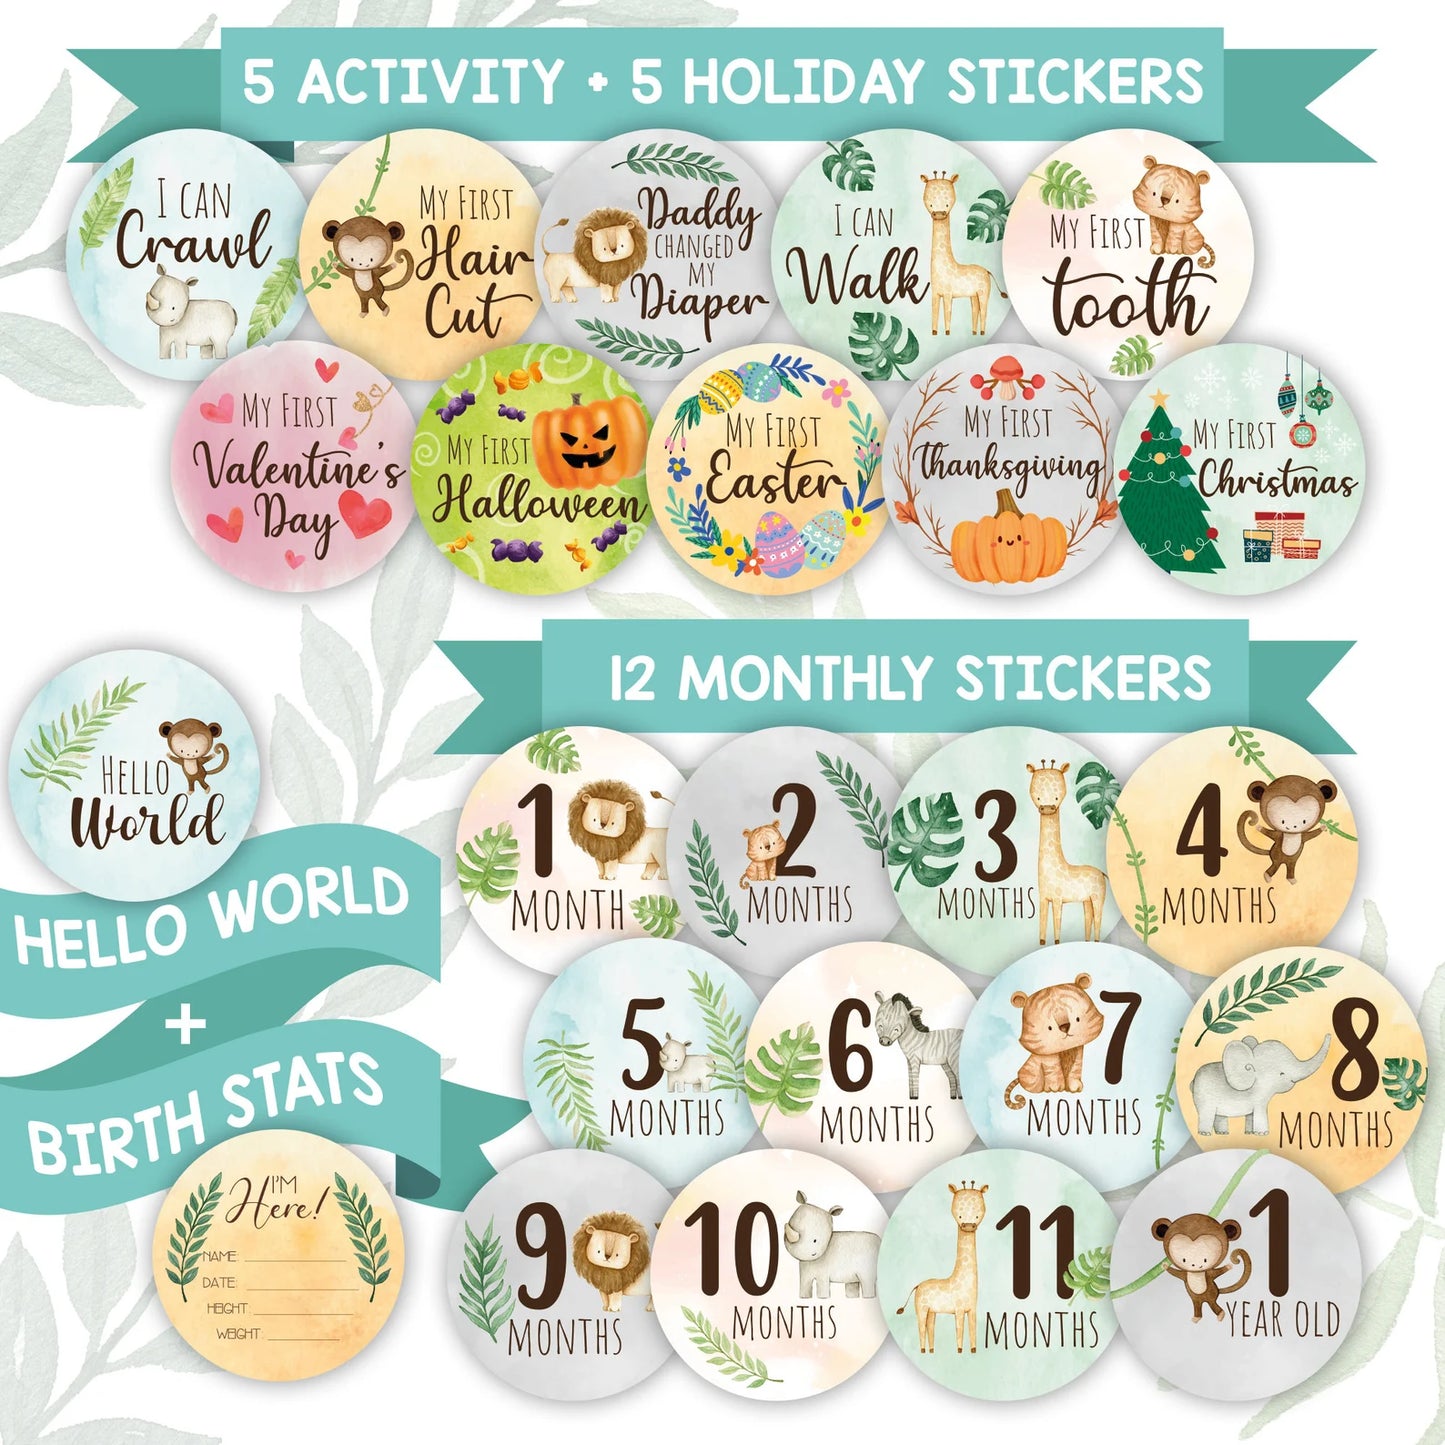 Baby Milestone Stickers Set of 24 - Safari